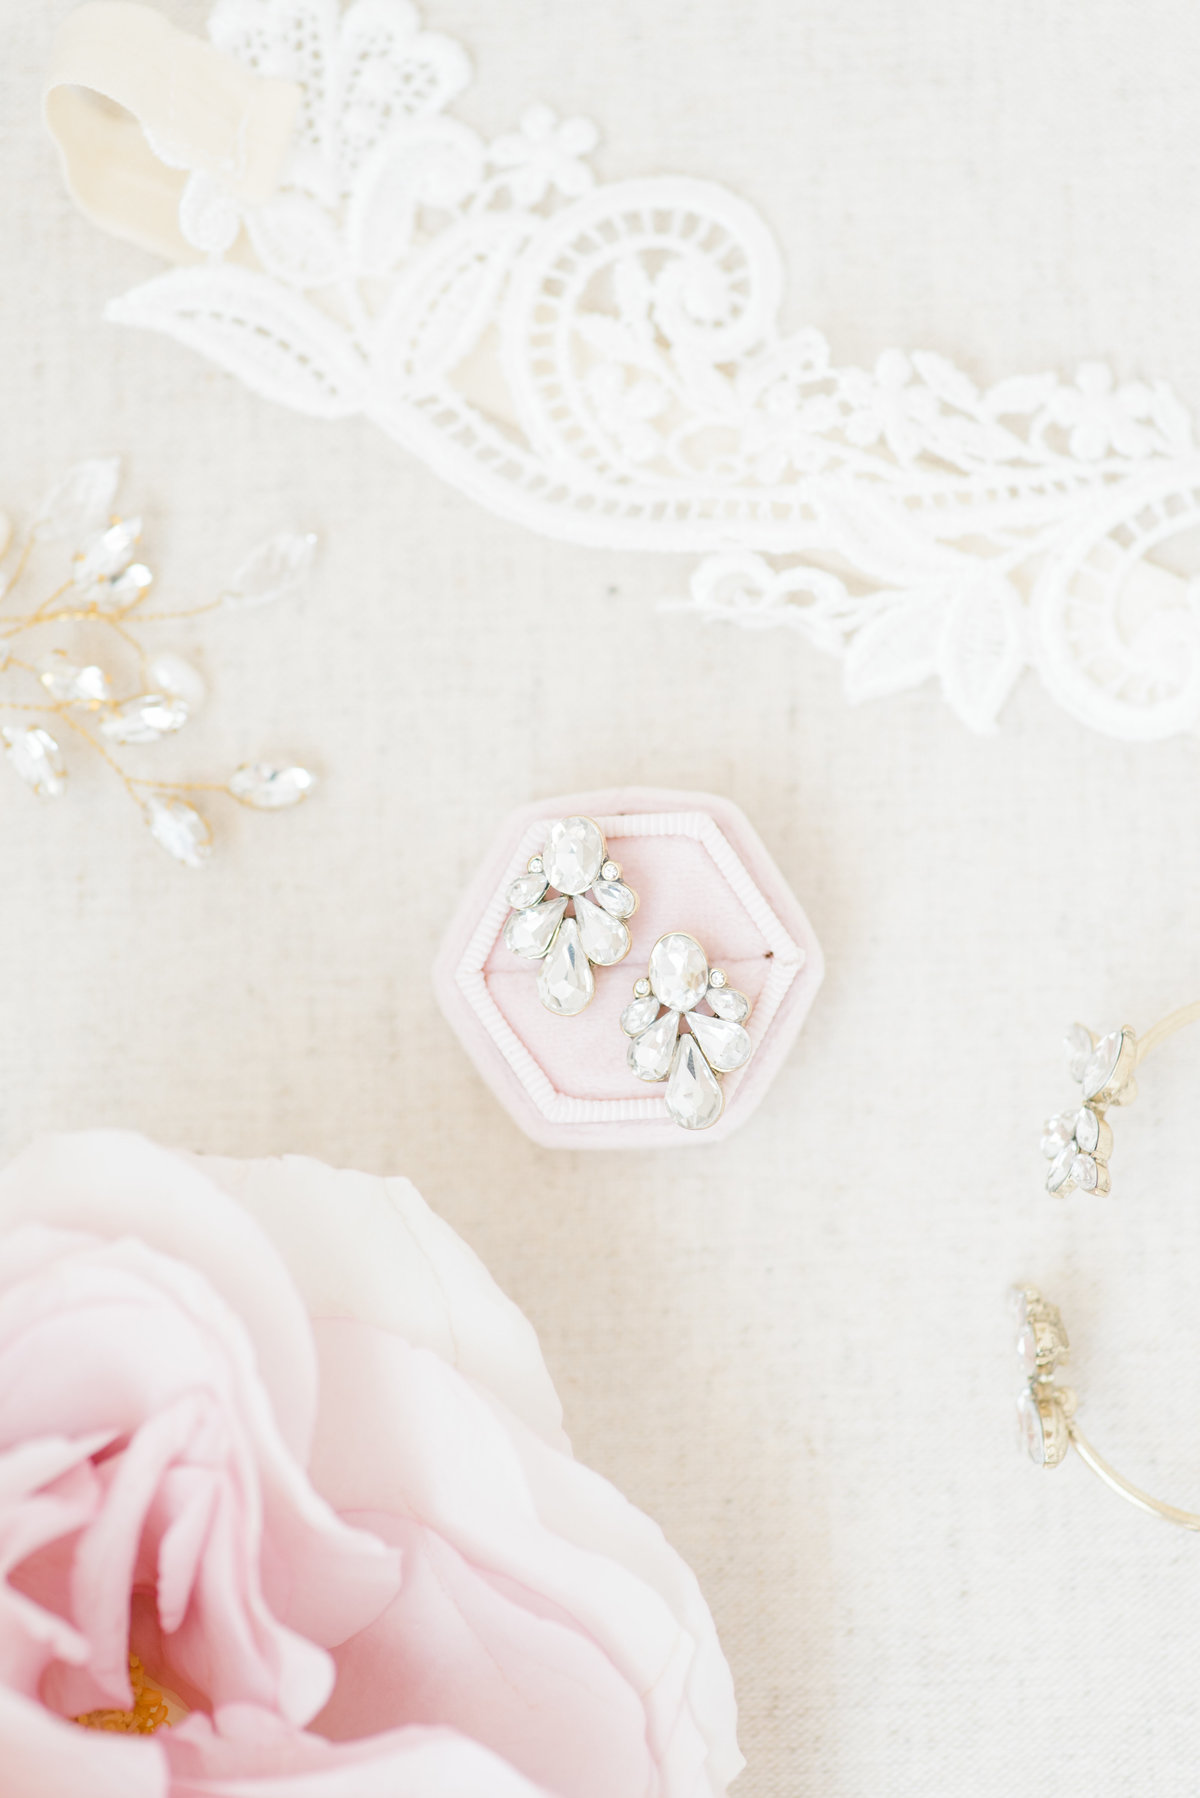 styled-jewelry-near-pink-flowers